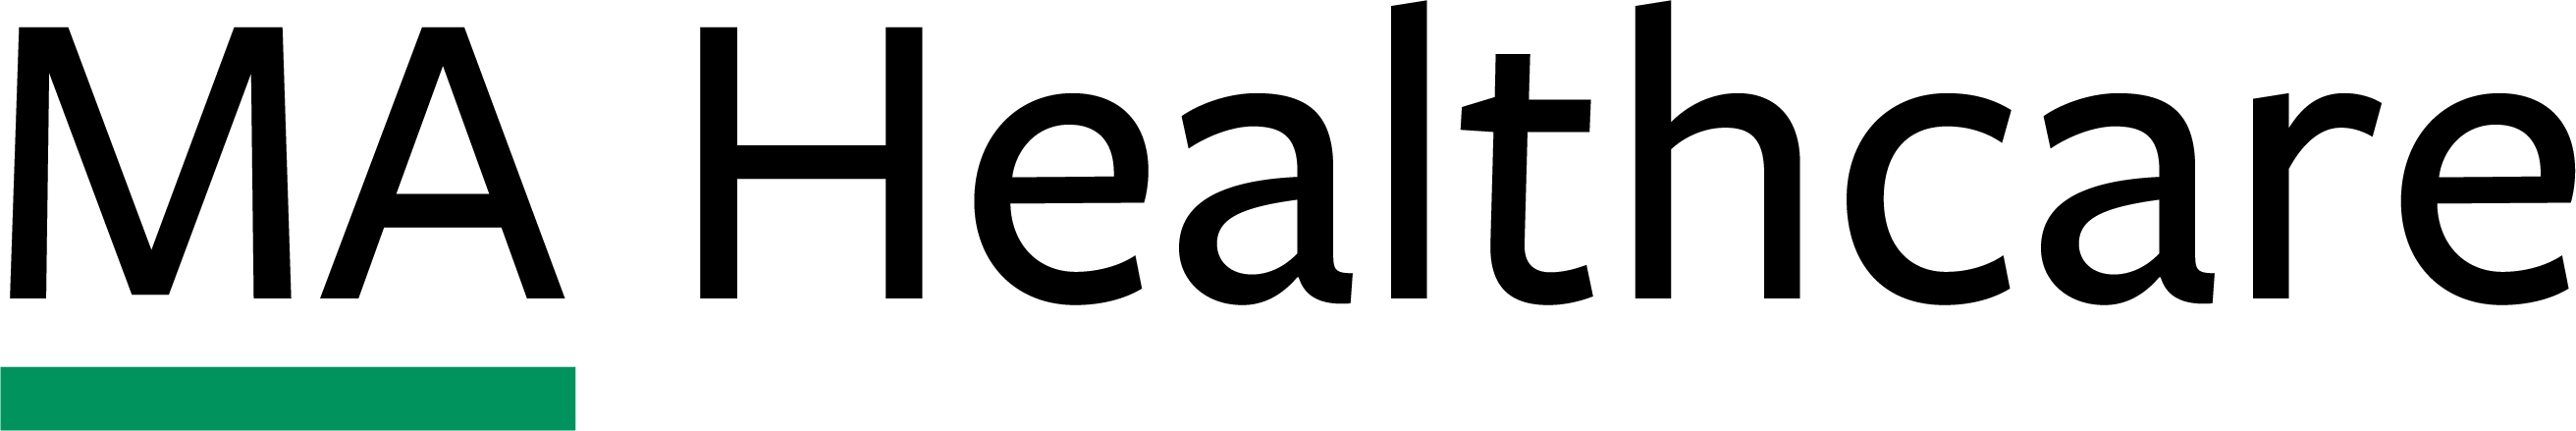 MA Healthcare Official Logo